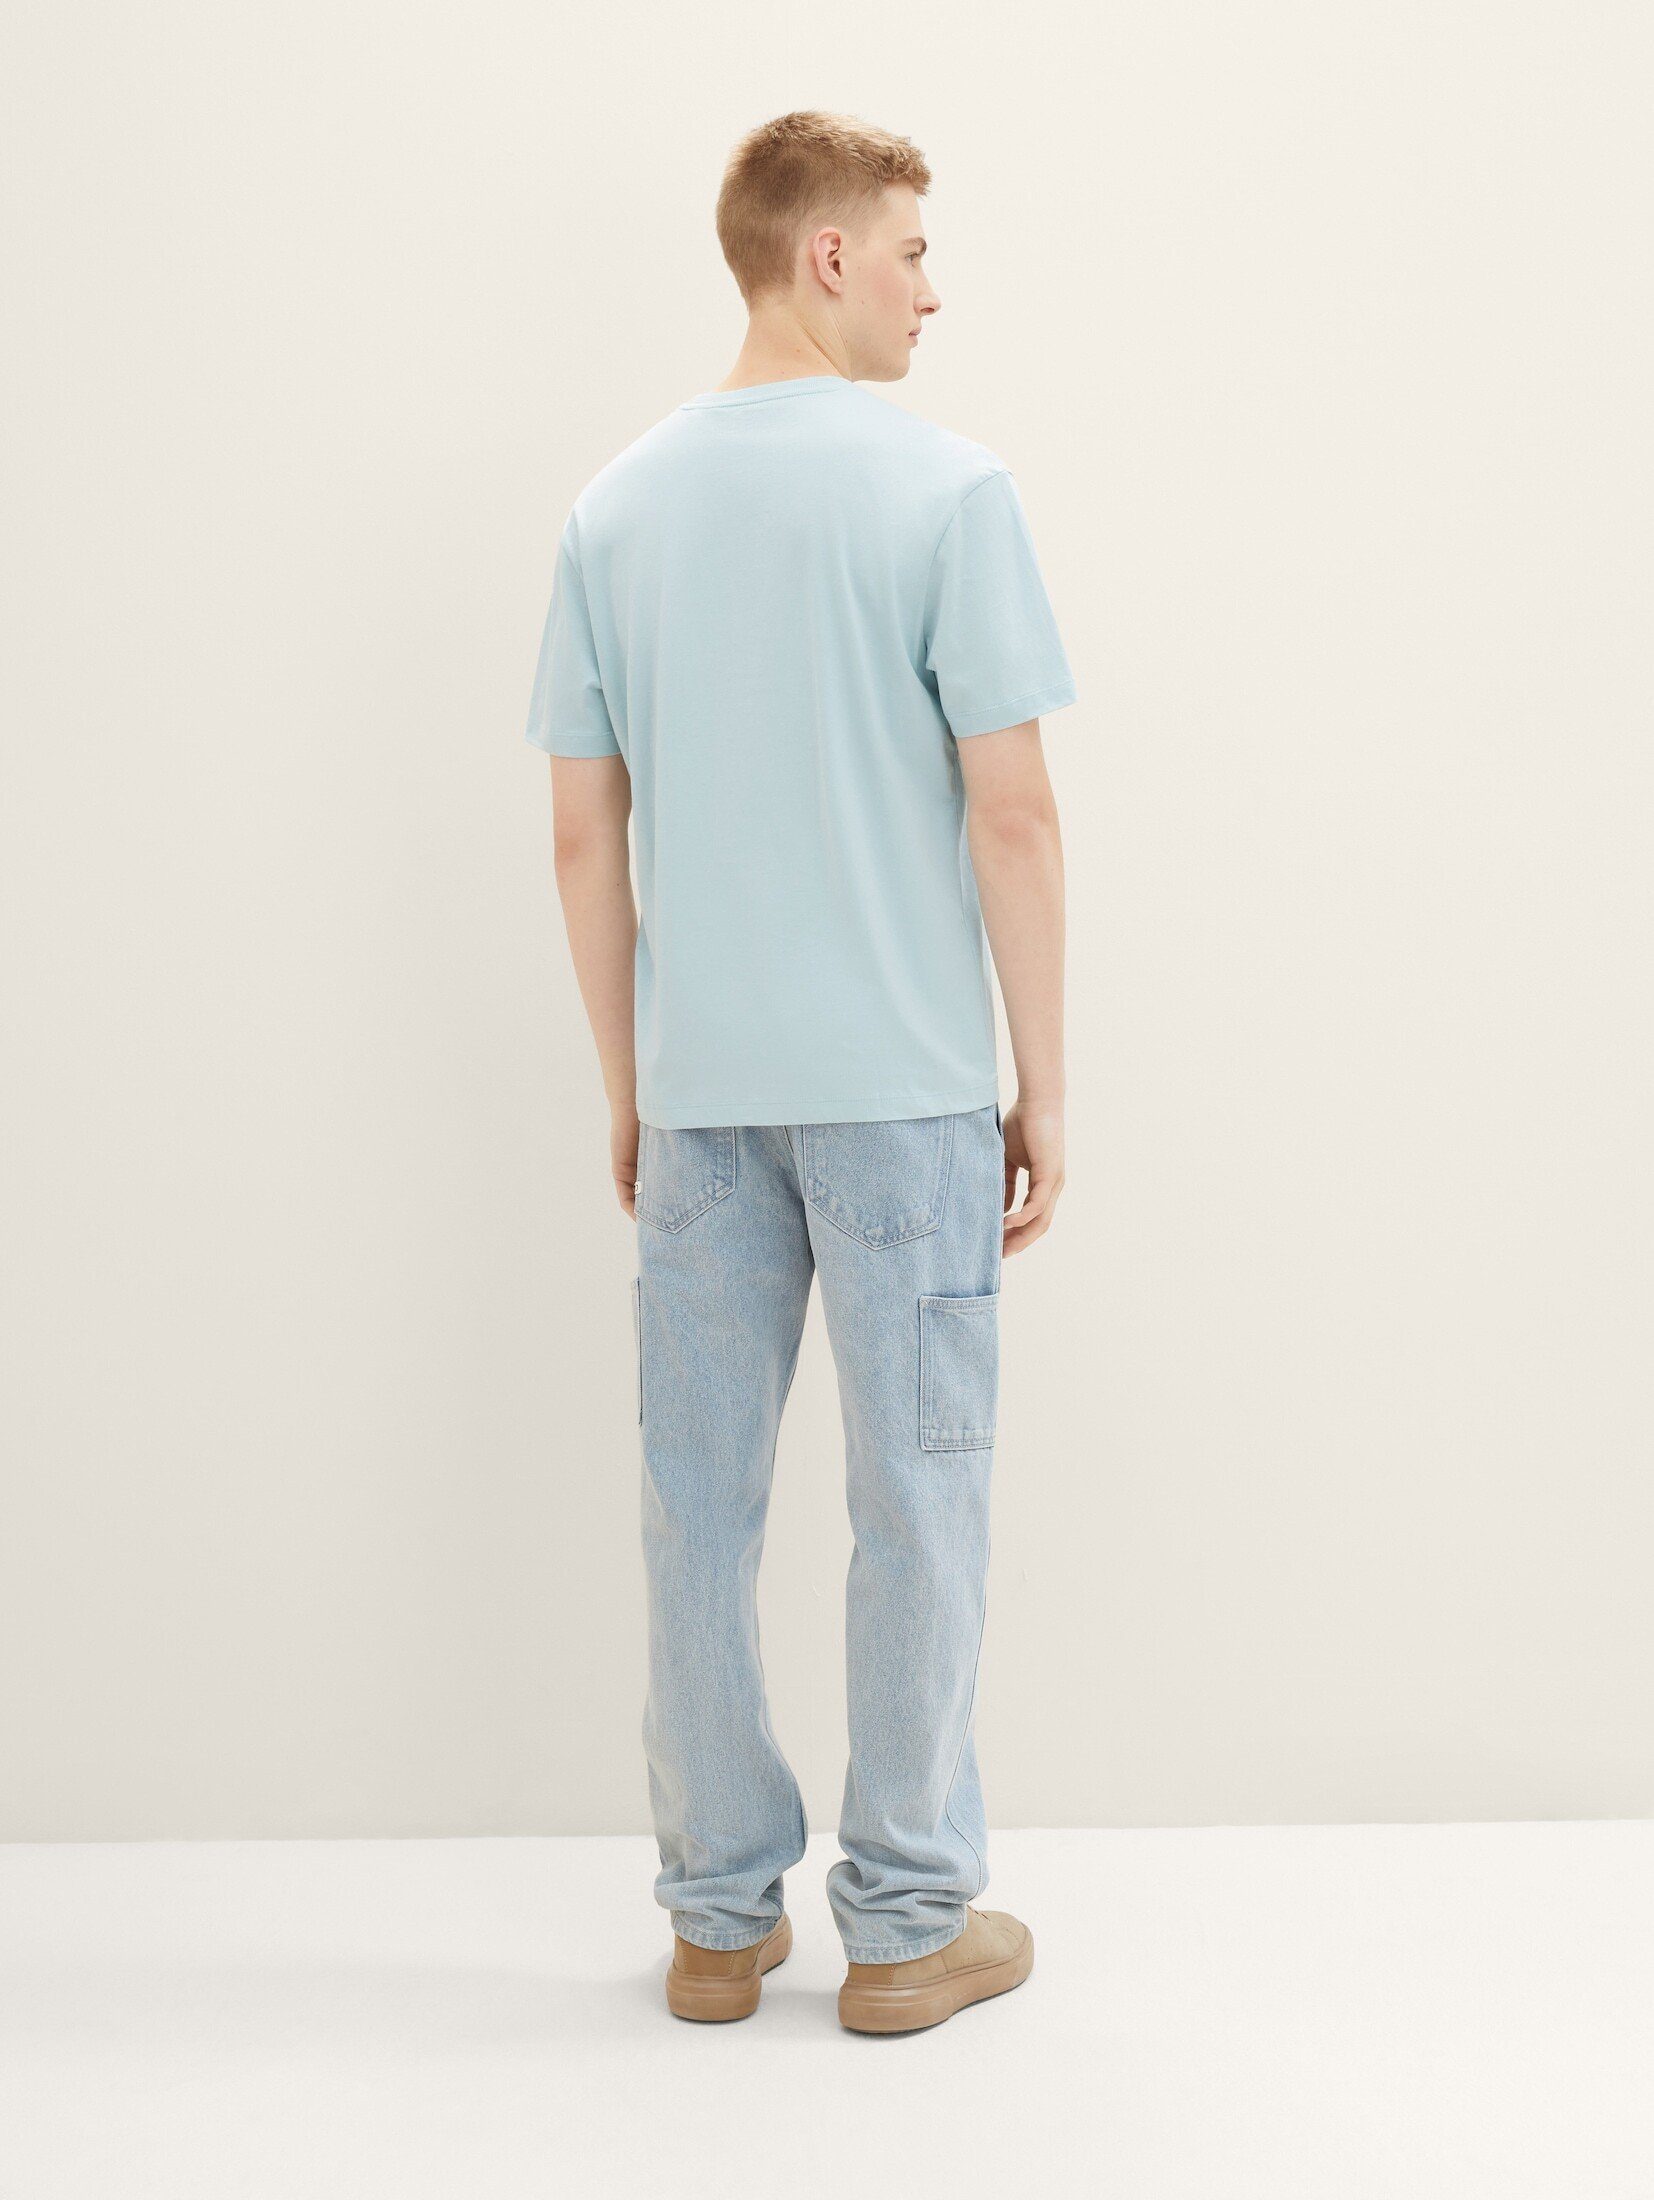 TOM TAILOR Denim T-Shirt T-Shirt dusty mint Bio-Baumwolle blue mit